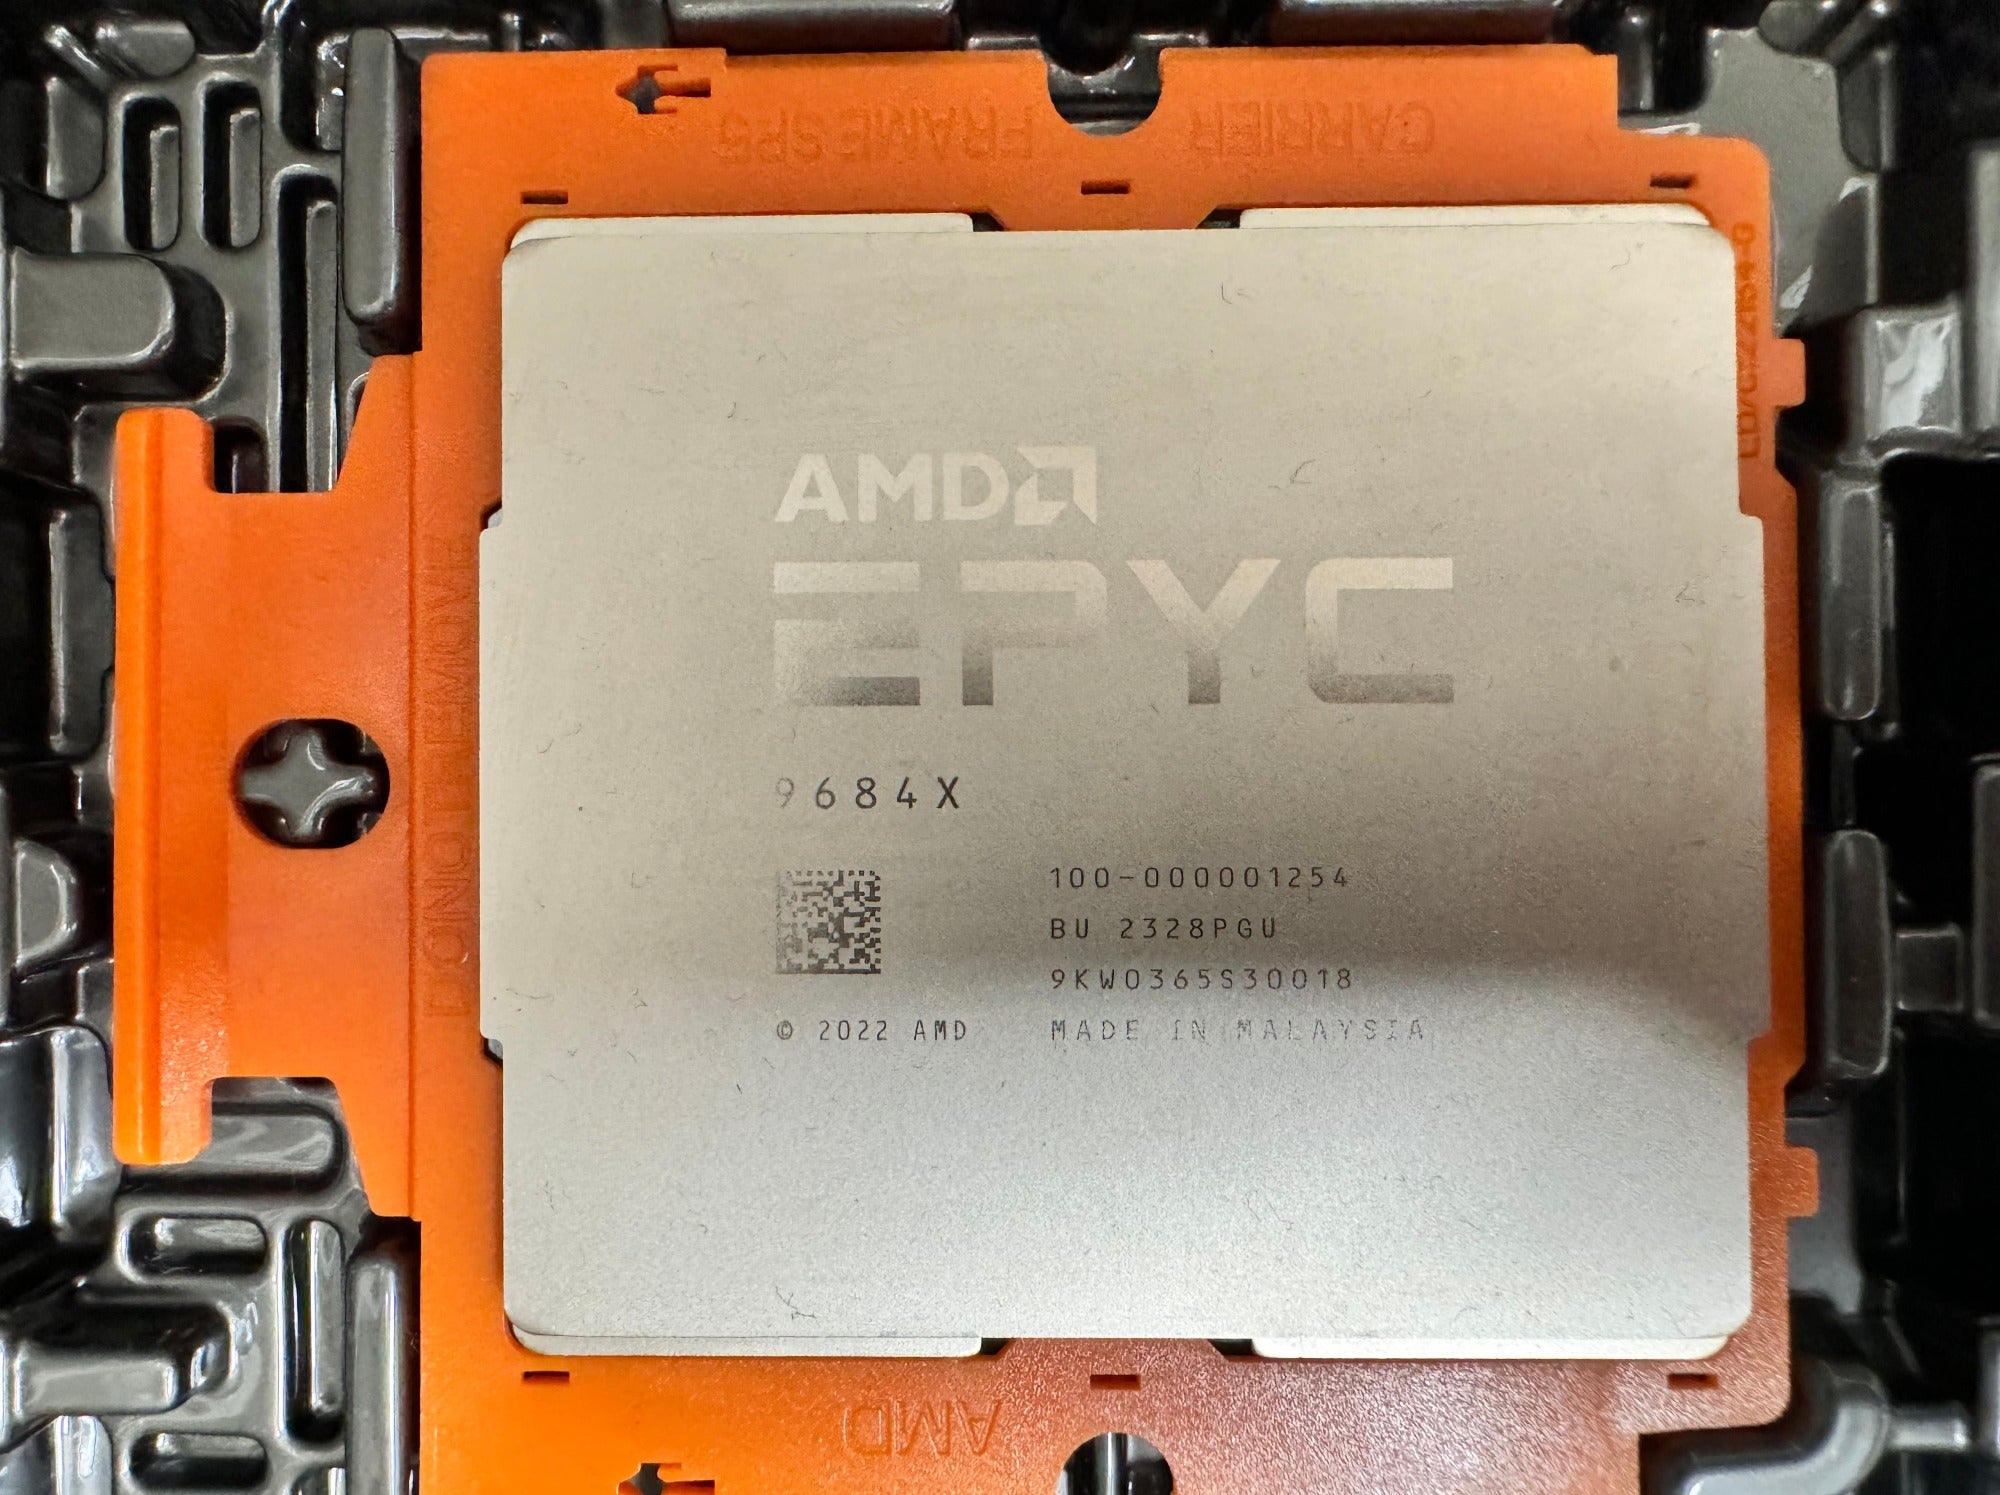 AMD EPYC 9684X Processor 96 Cores 2.55GHz  100-000001254 Tray